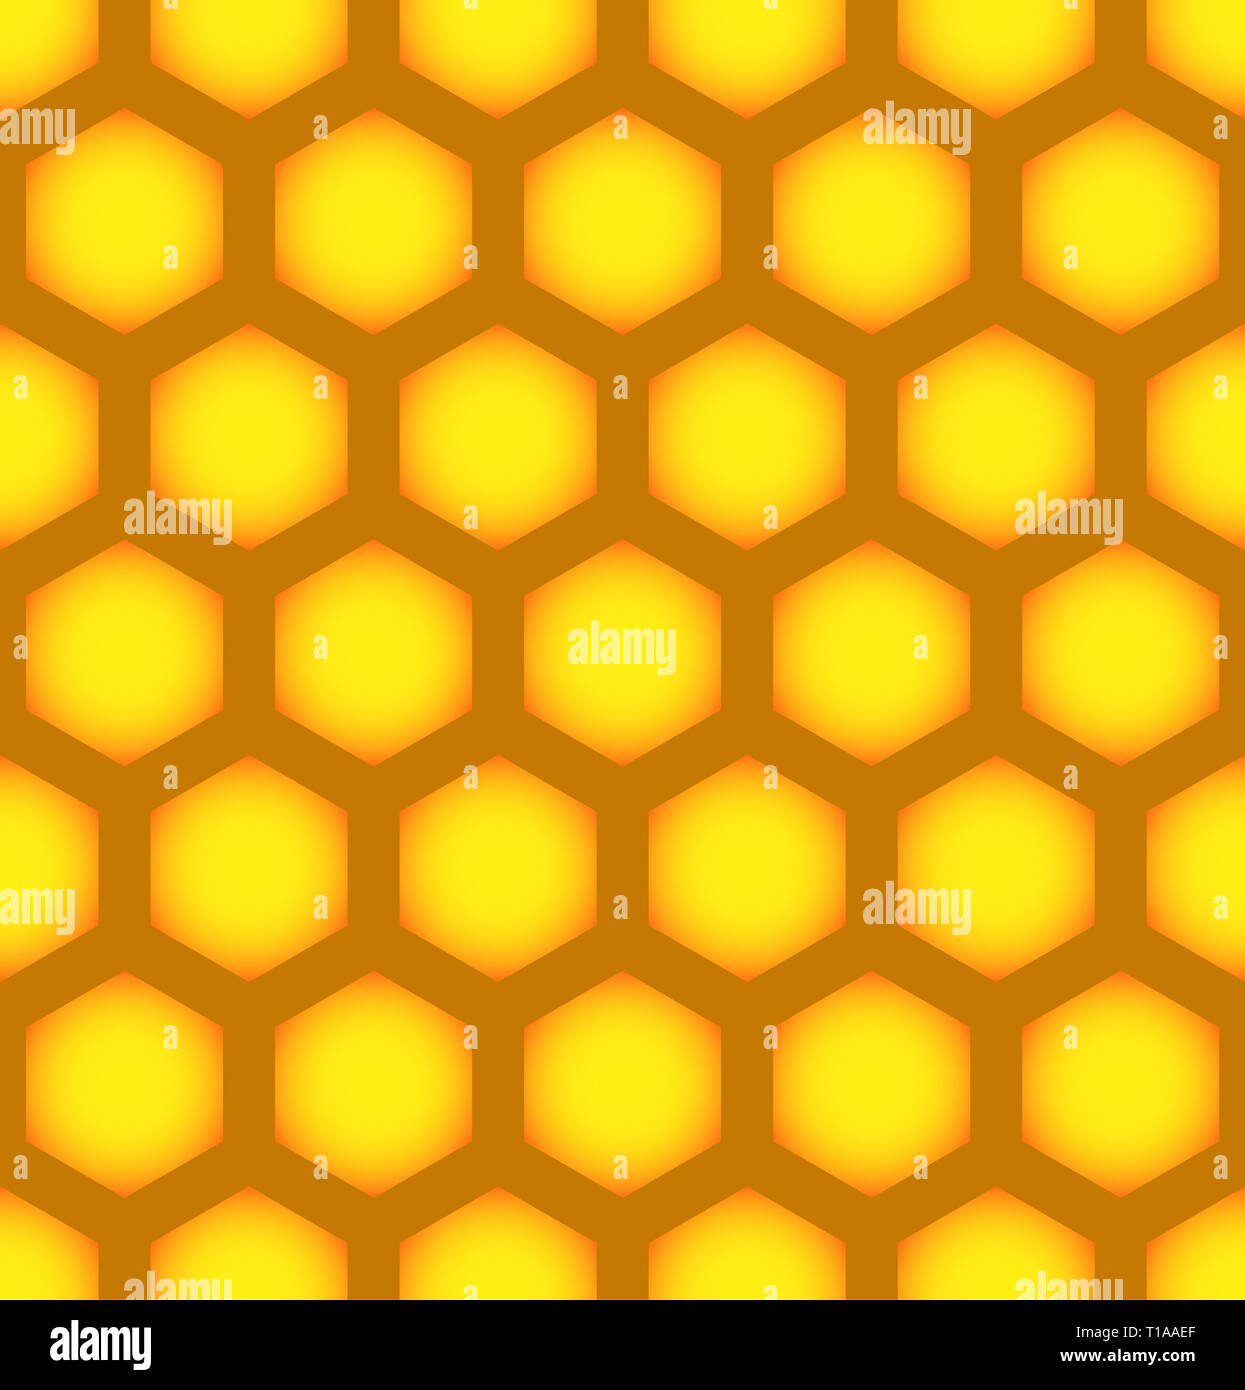 Eps 10 vector illustration of Honeycomb repeatable pattern, Seamless Hexagonal pattern. Stock Photo